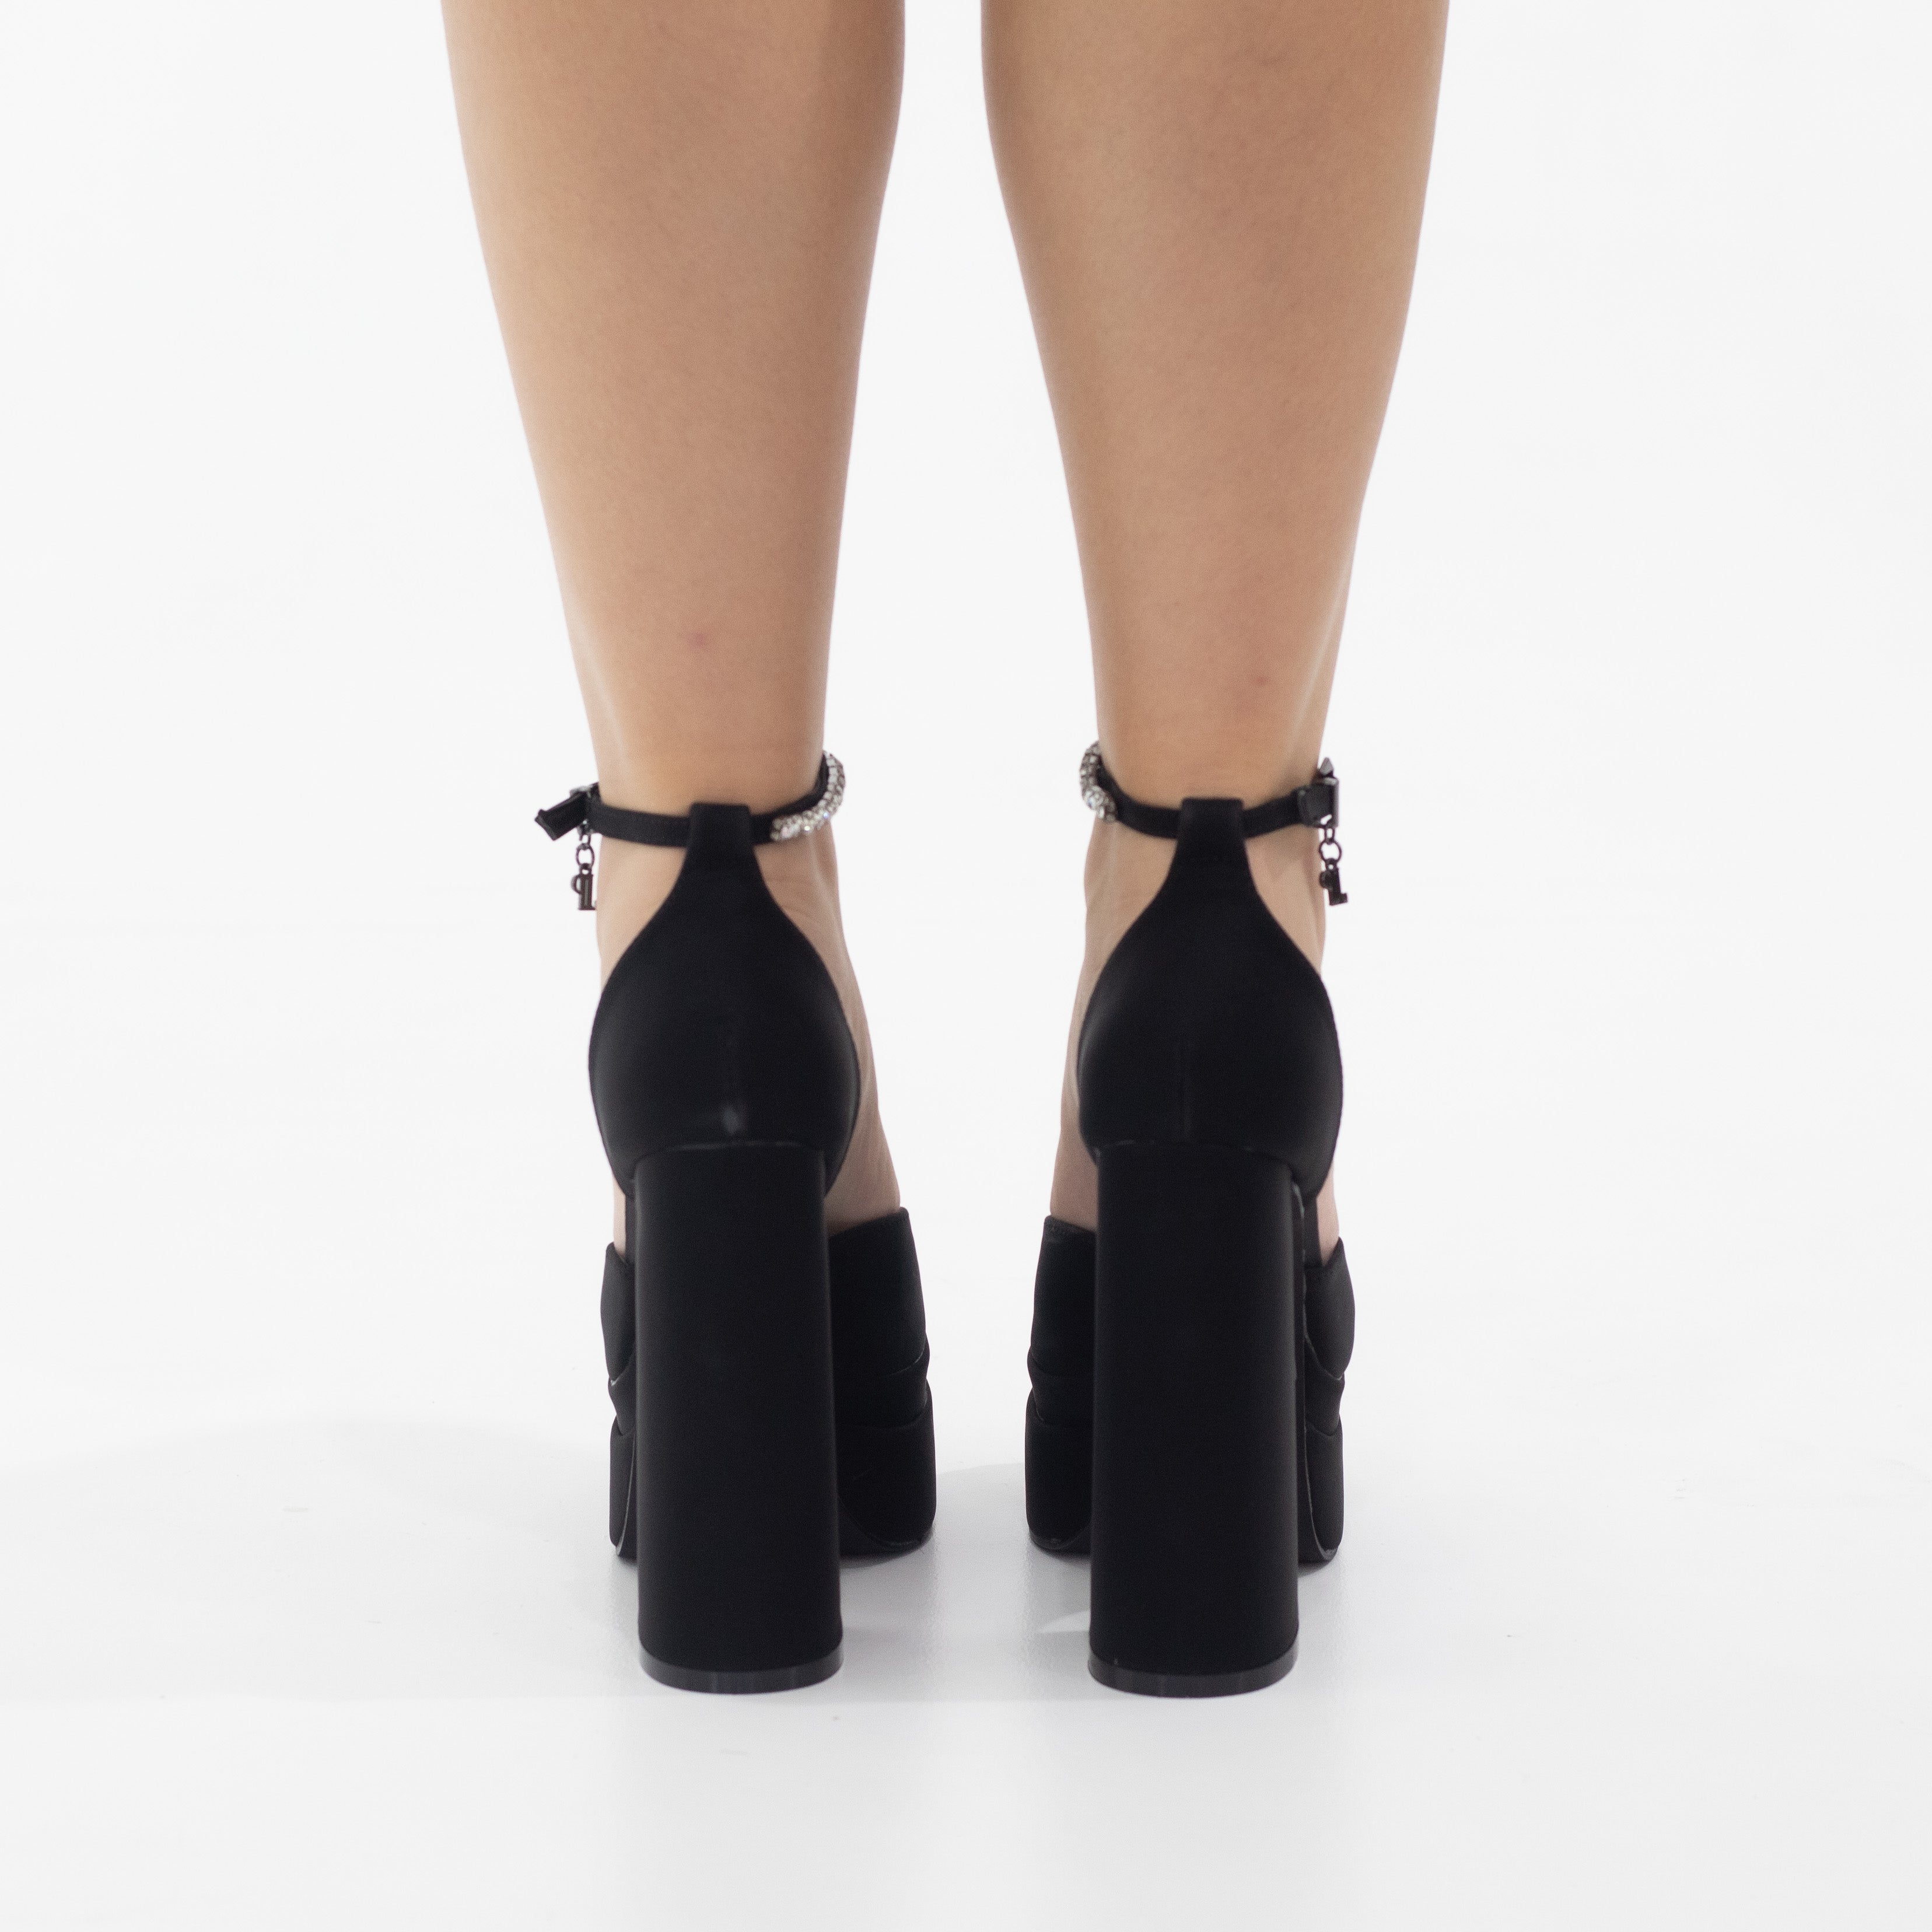 Trixie open waist 14.5cm high heel platform black